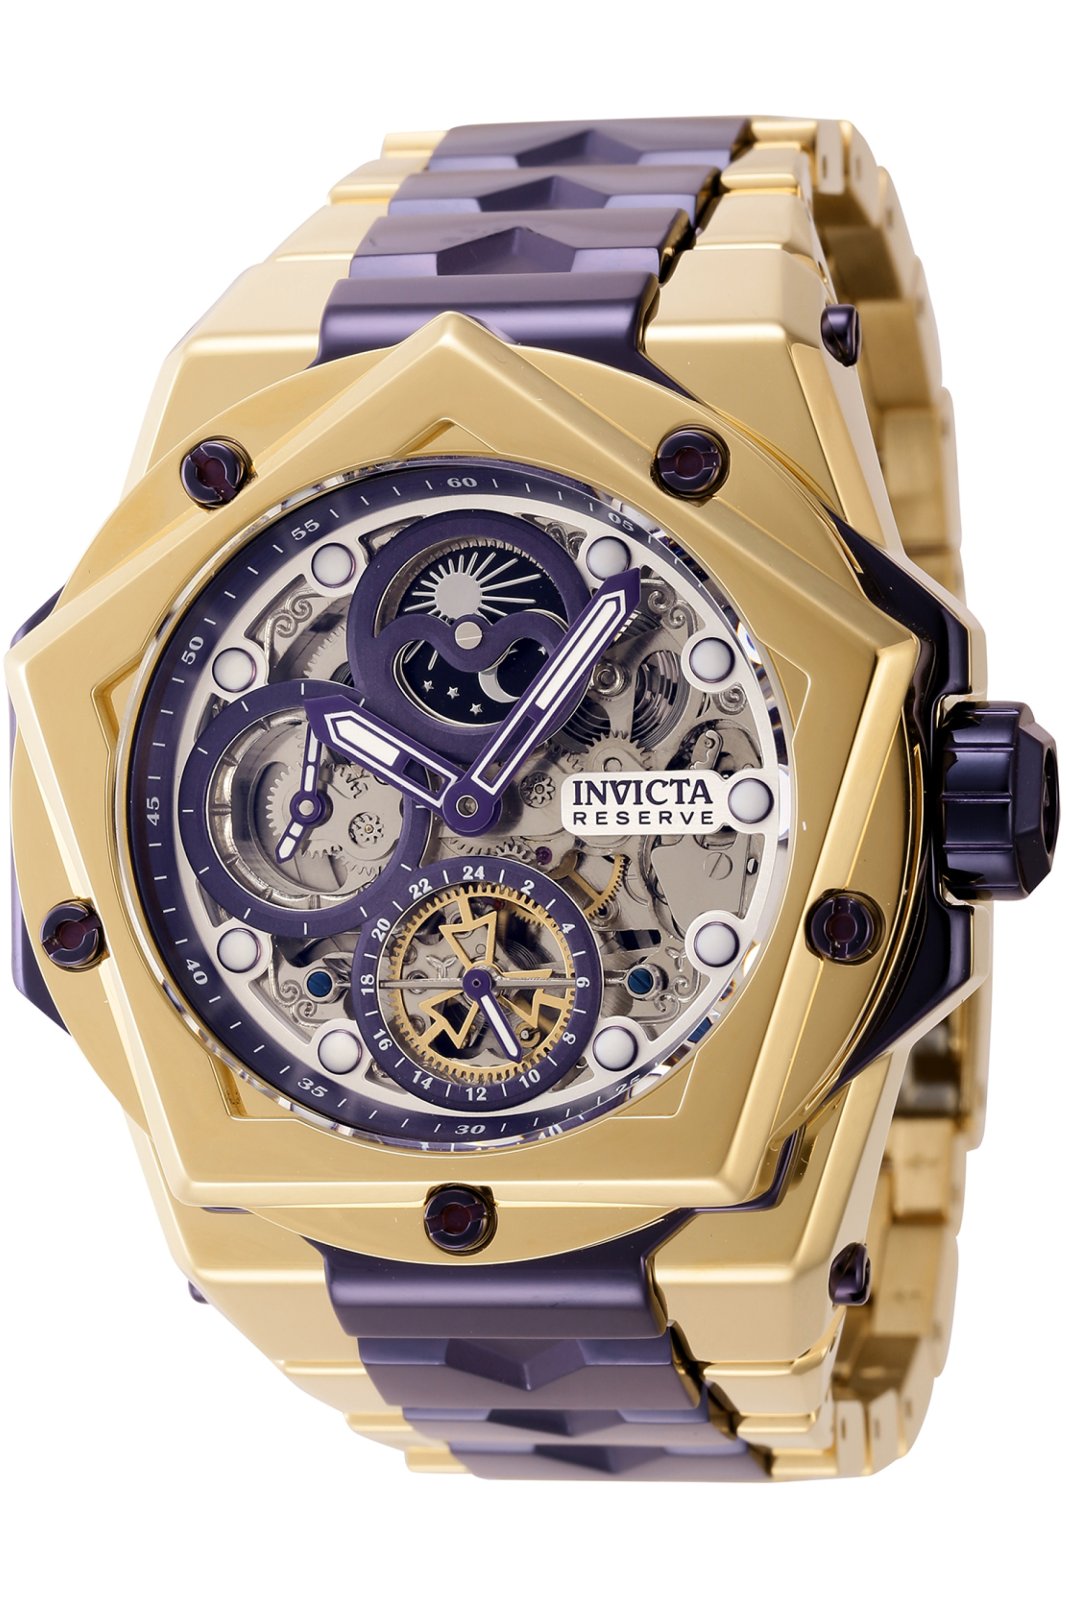 Invicta Helios 44604 Men's Automatic Watch - 54mm